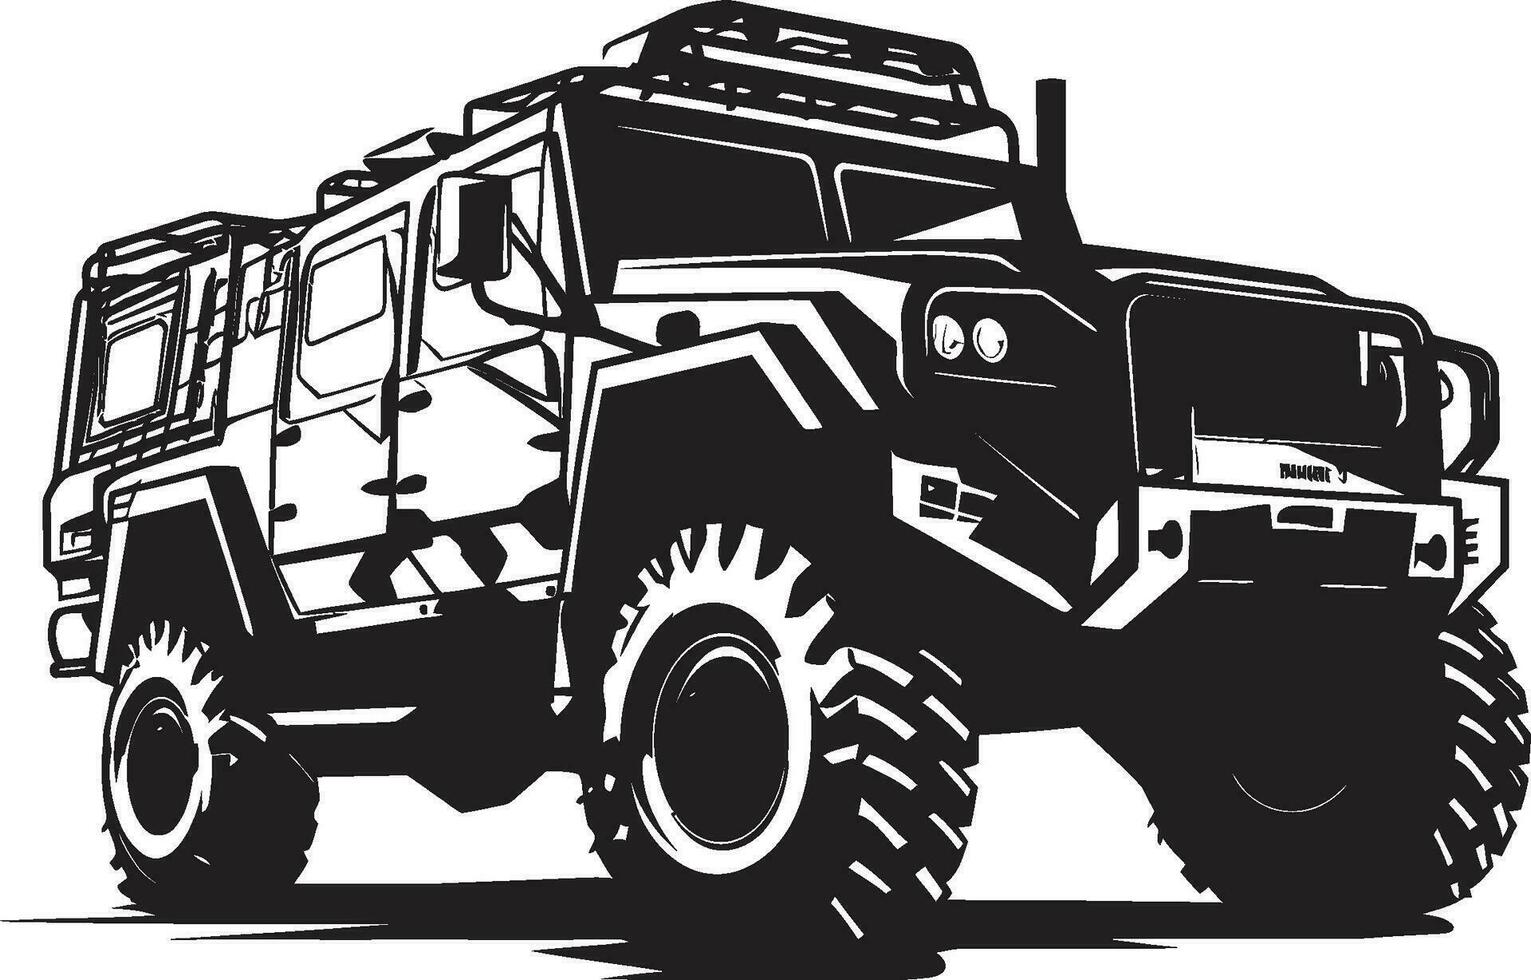 Defensive Recon Military Vehicle Icon Warrior s Ride Black Army 4x4 Symbol vector